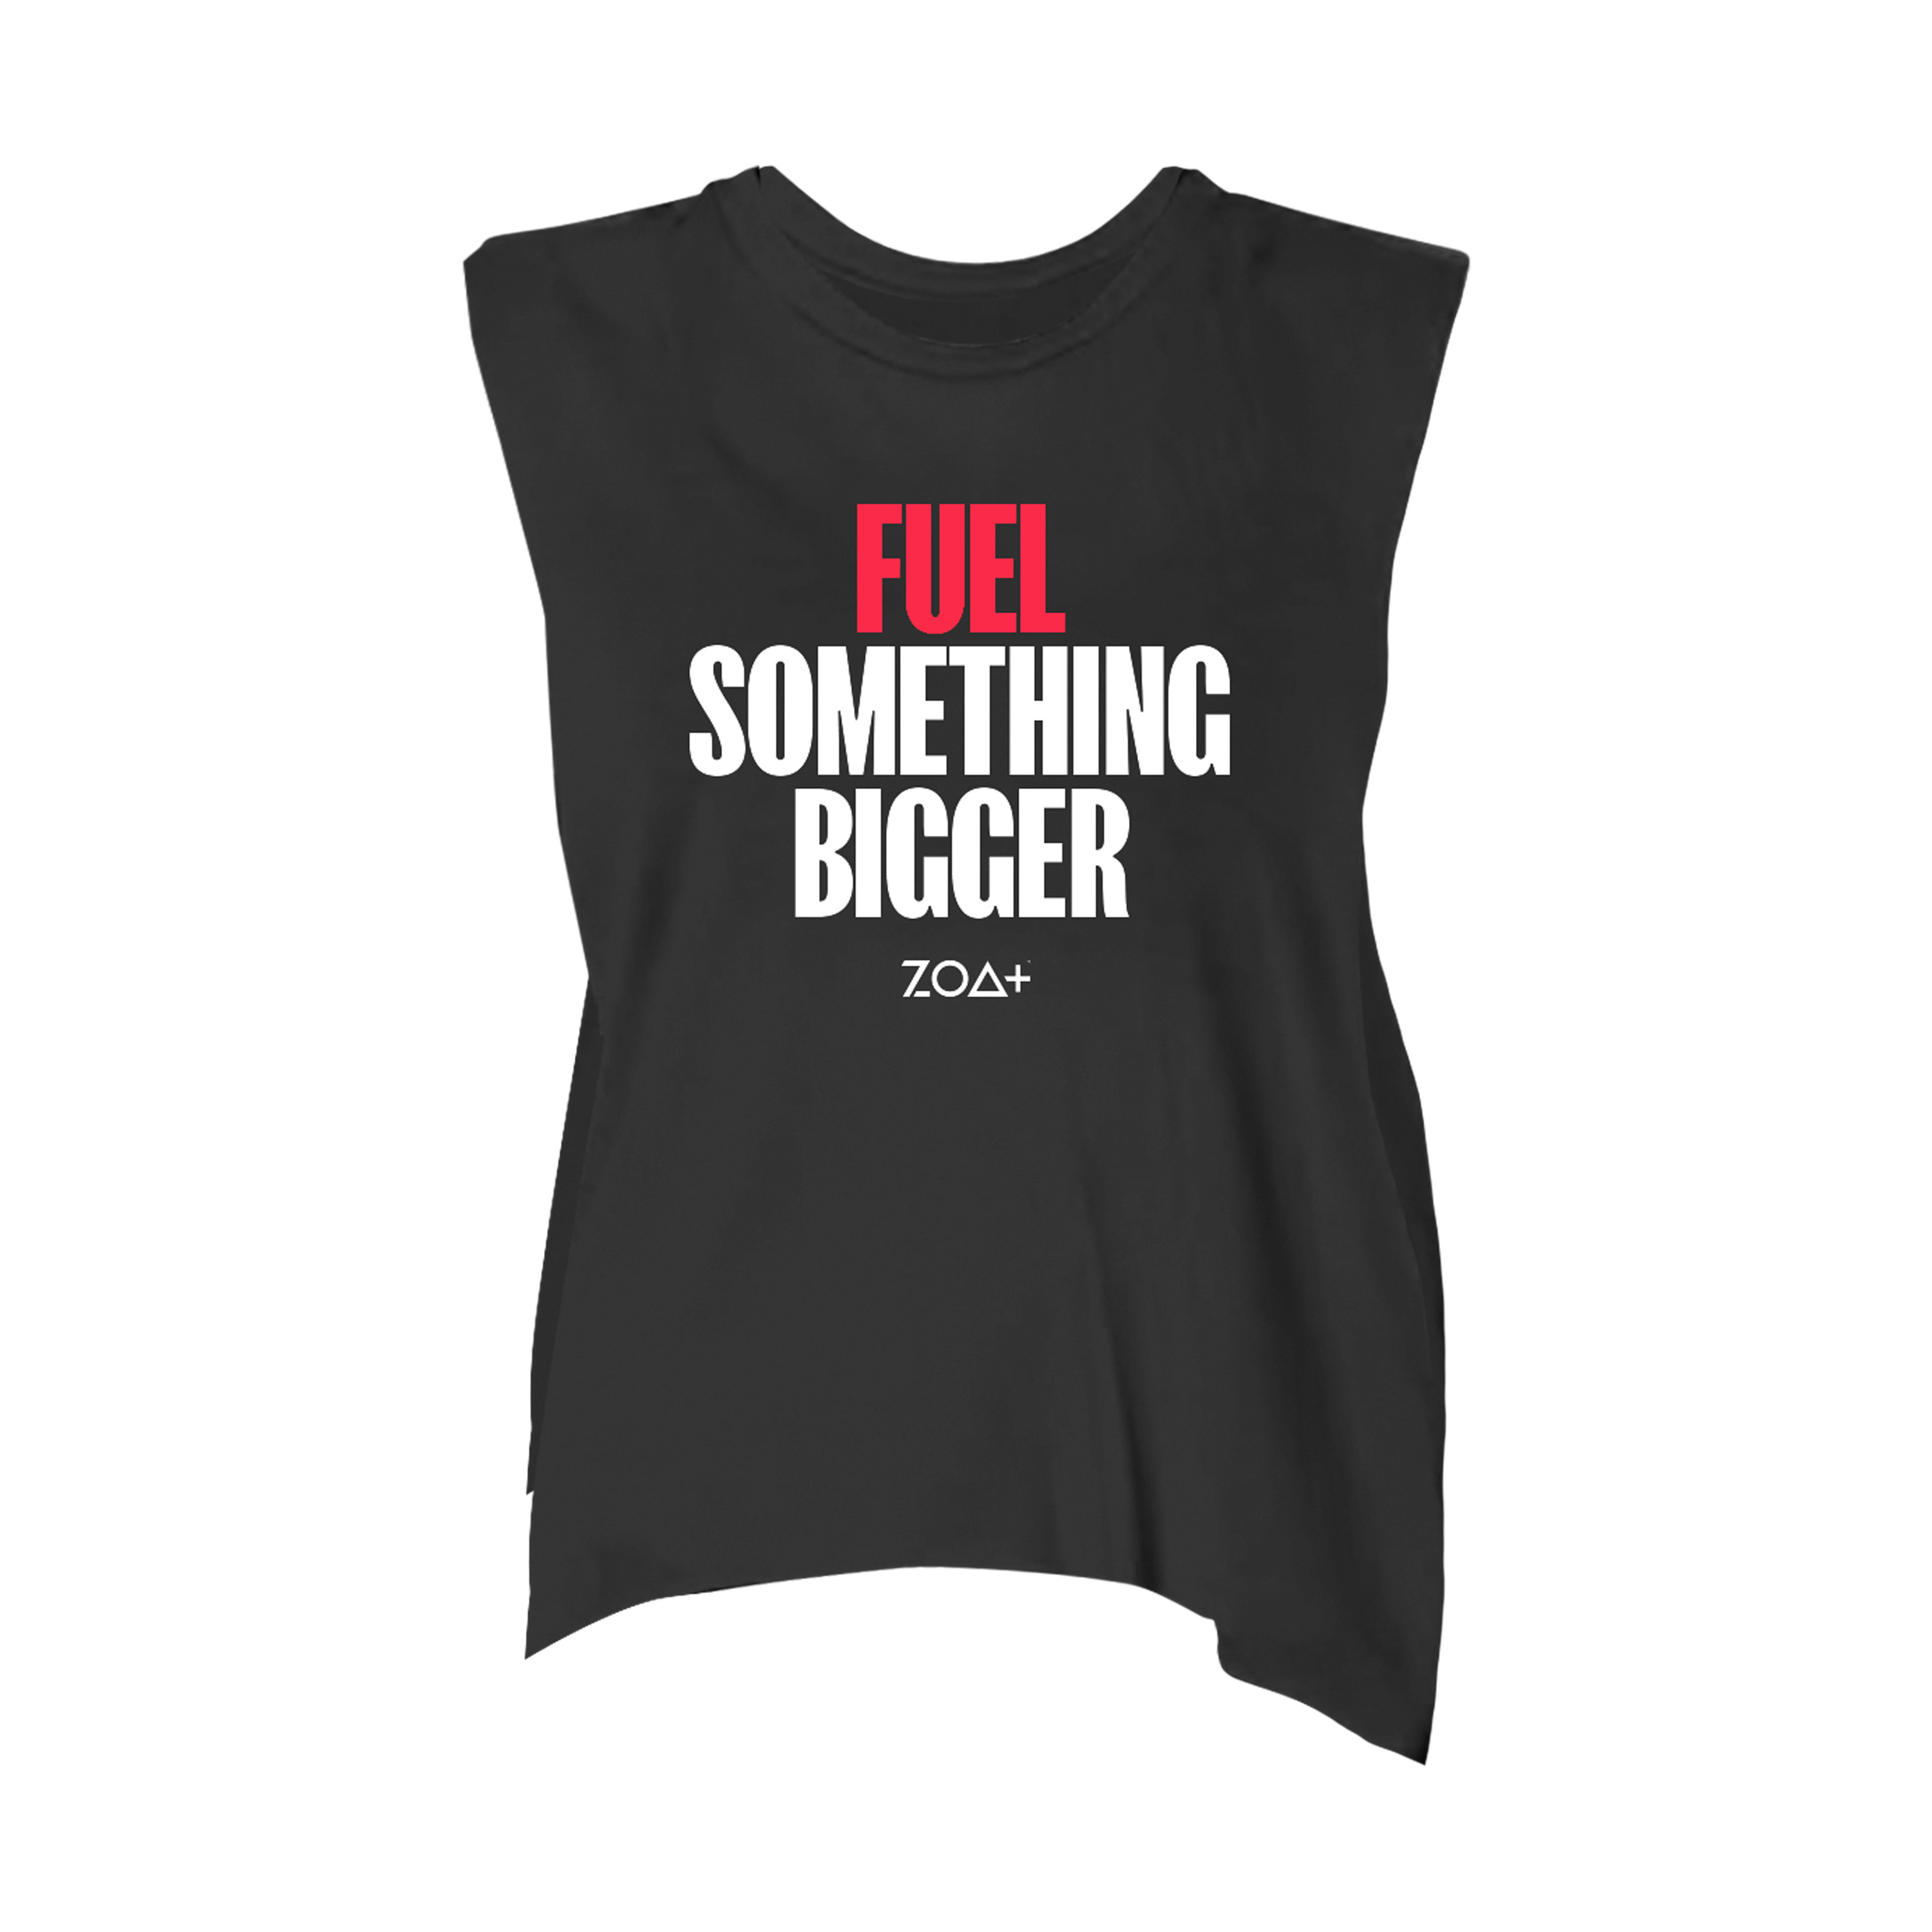 ZOA+ "Fuel Something Bigger" Women's Gym Tank